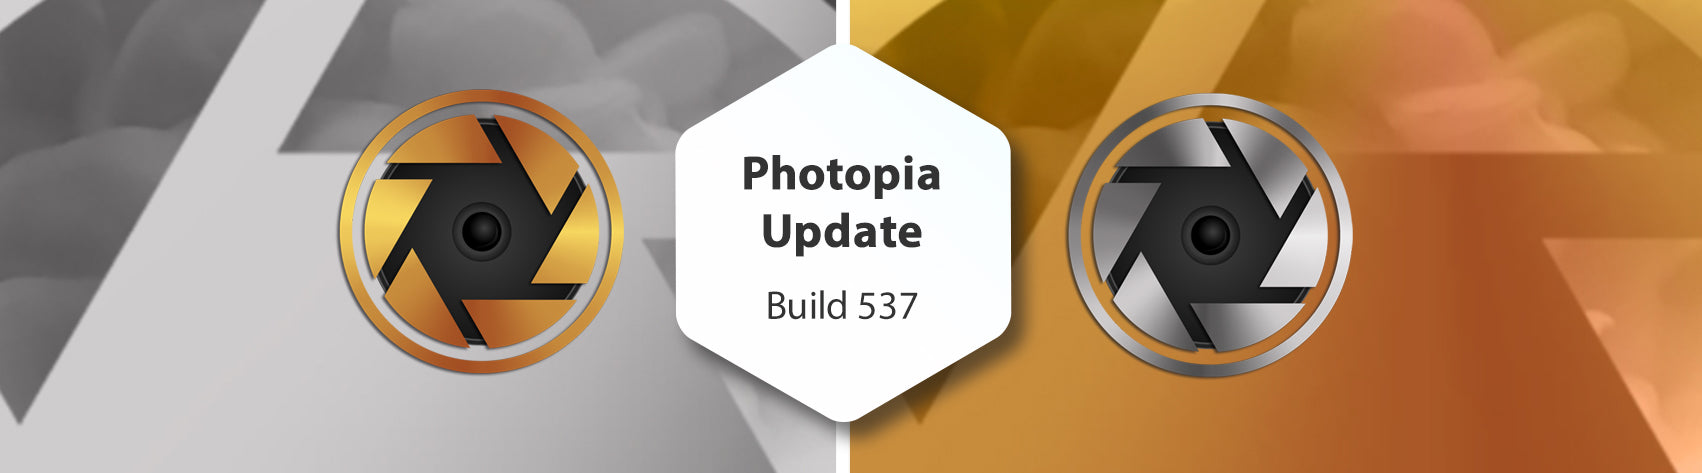 Photopia Update - Build 537